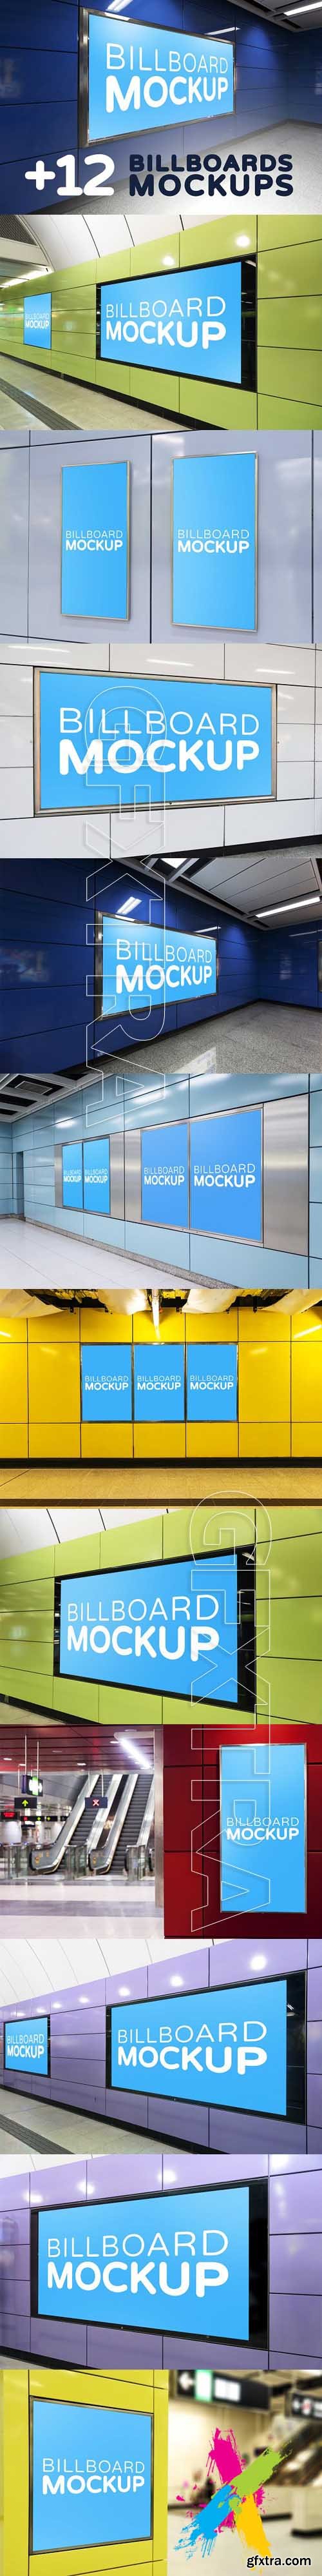 CM - Subway Billboards Mockups Vol 2 1511972